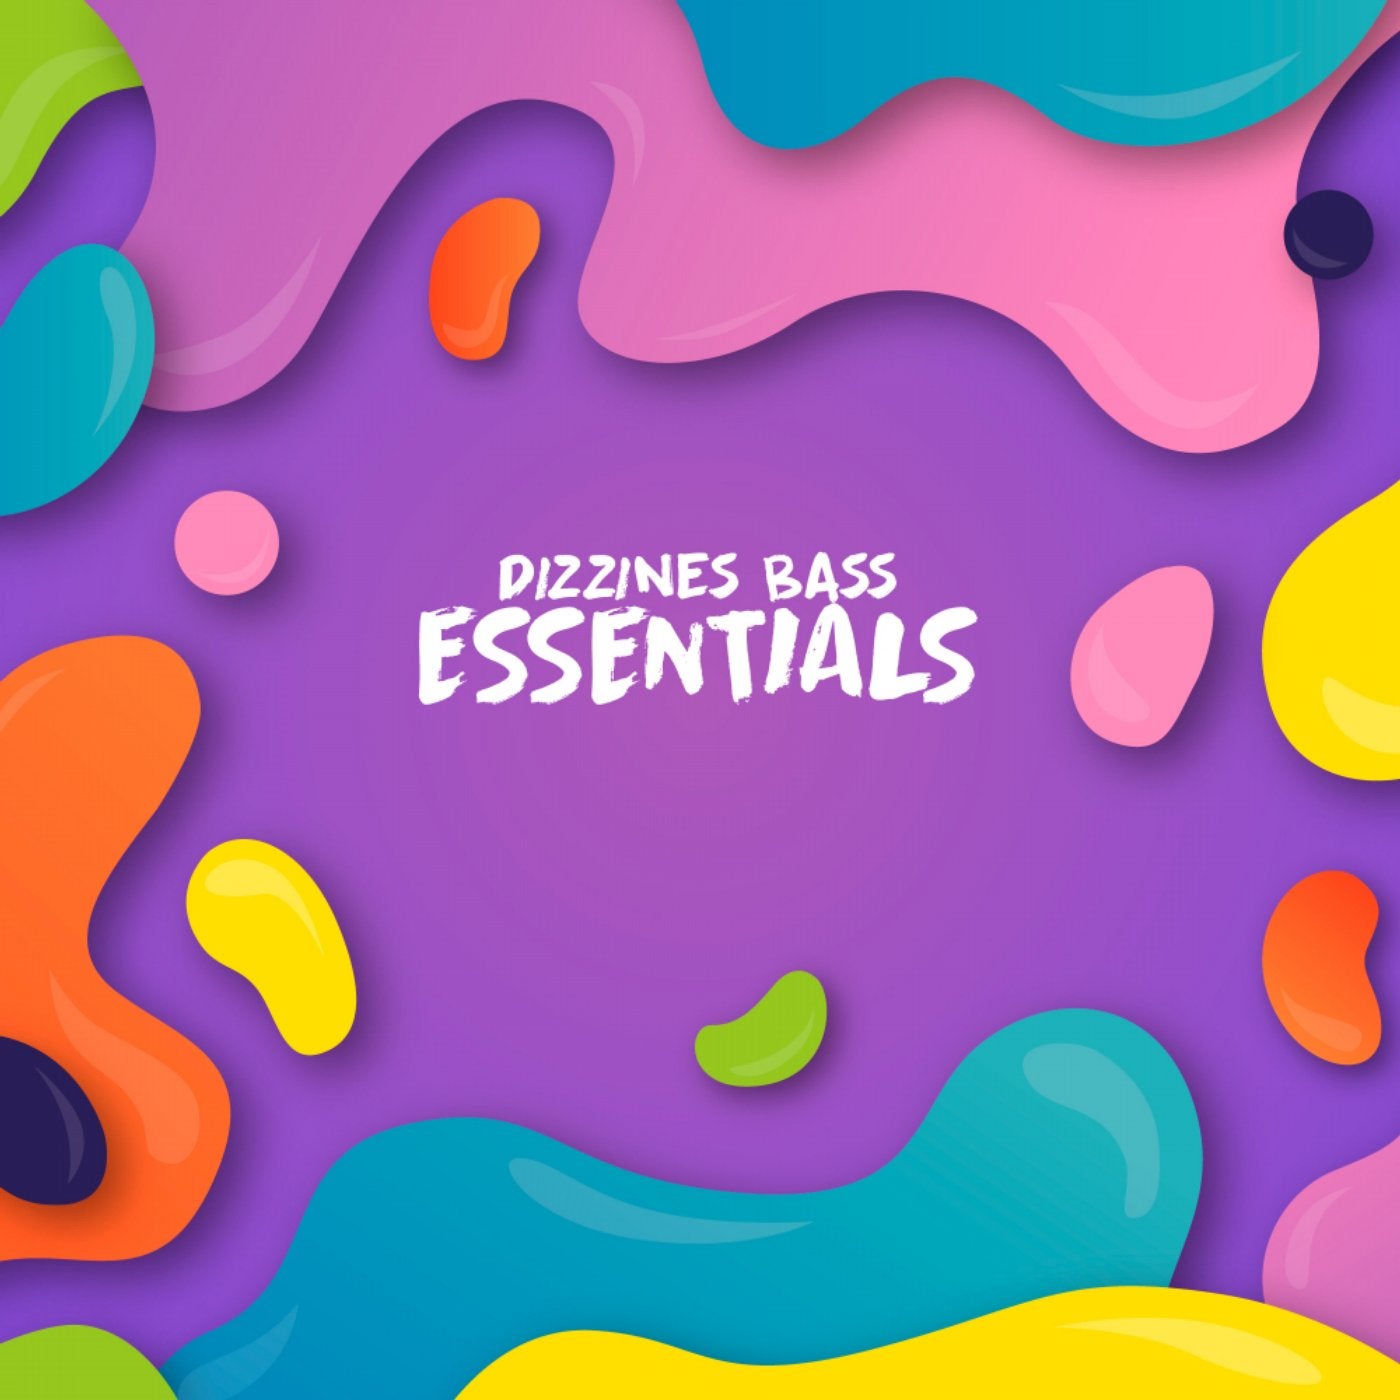 Dizzines Bass Essentials